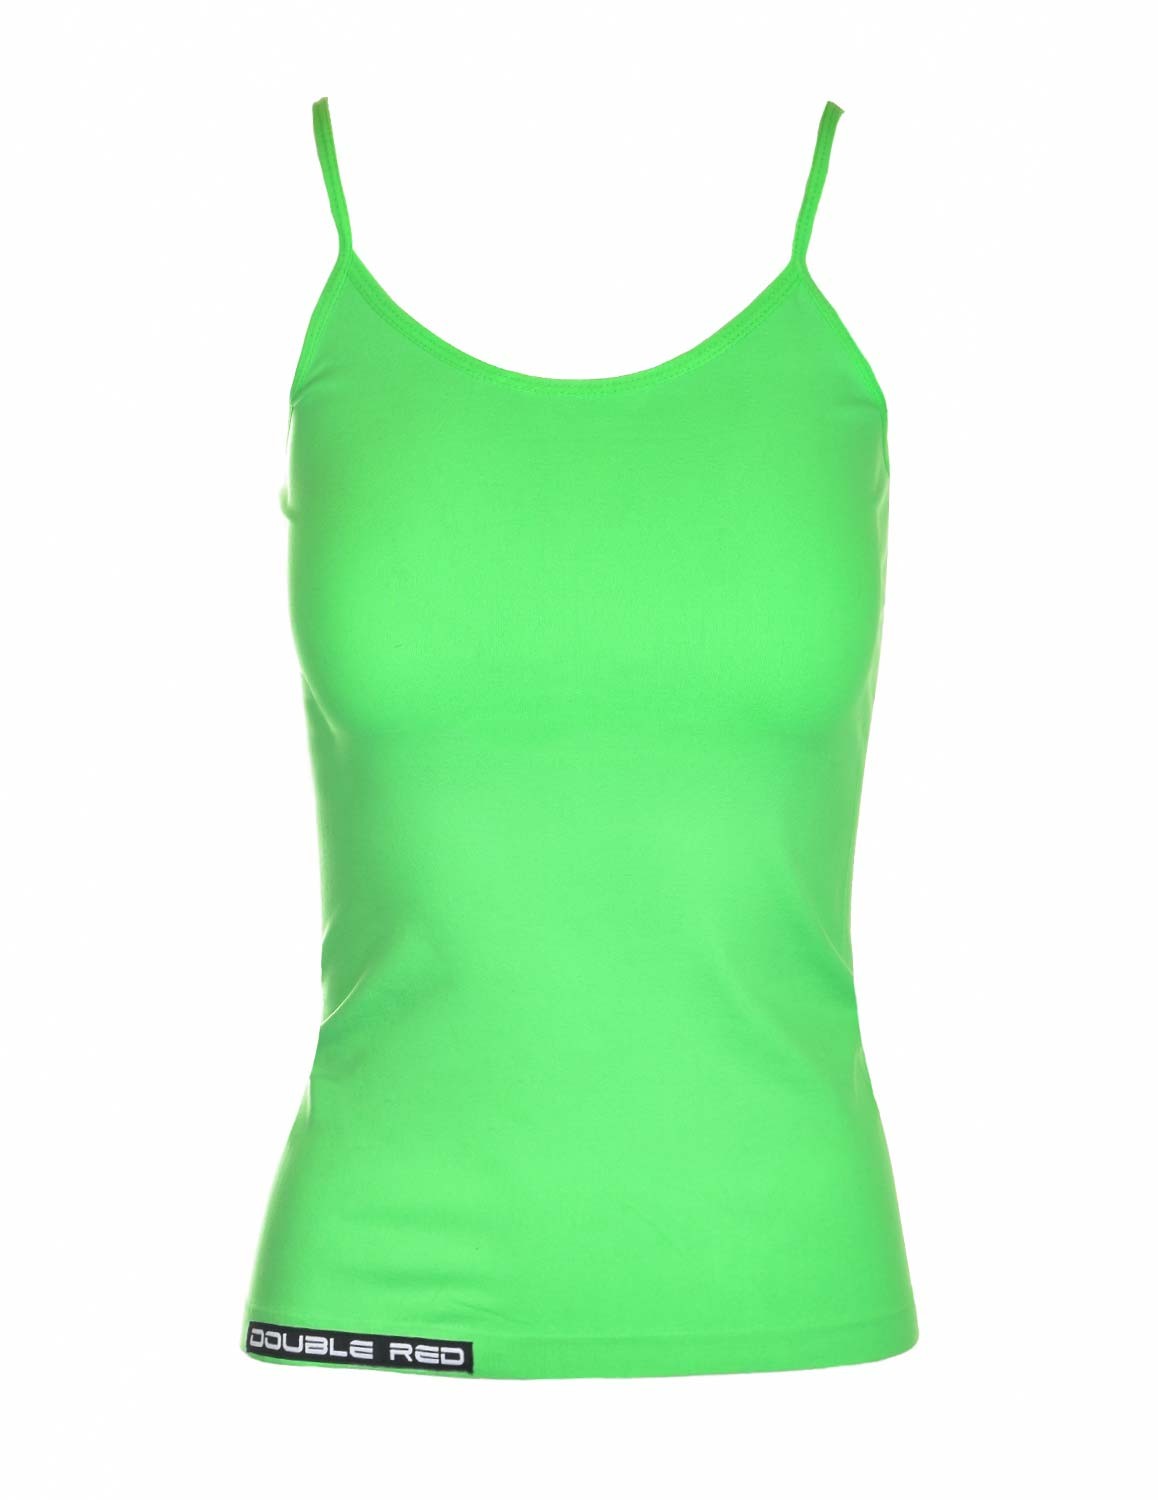 Tank Tops Women's Sleeveless Green